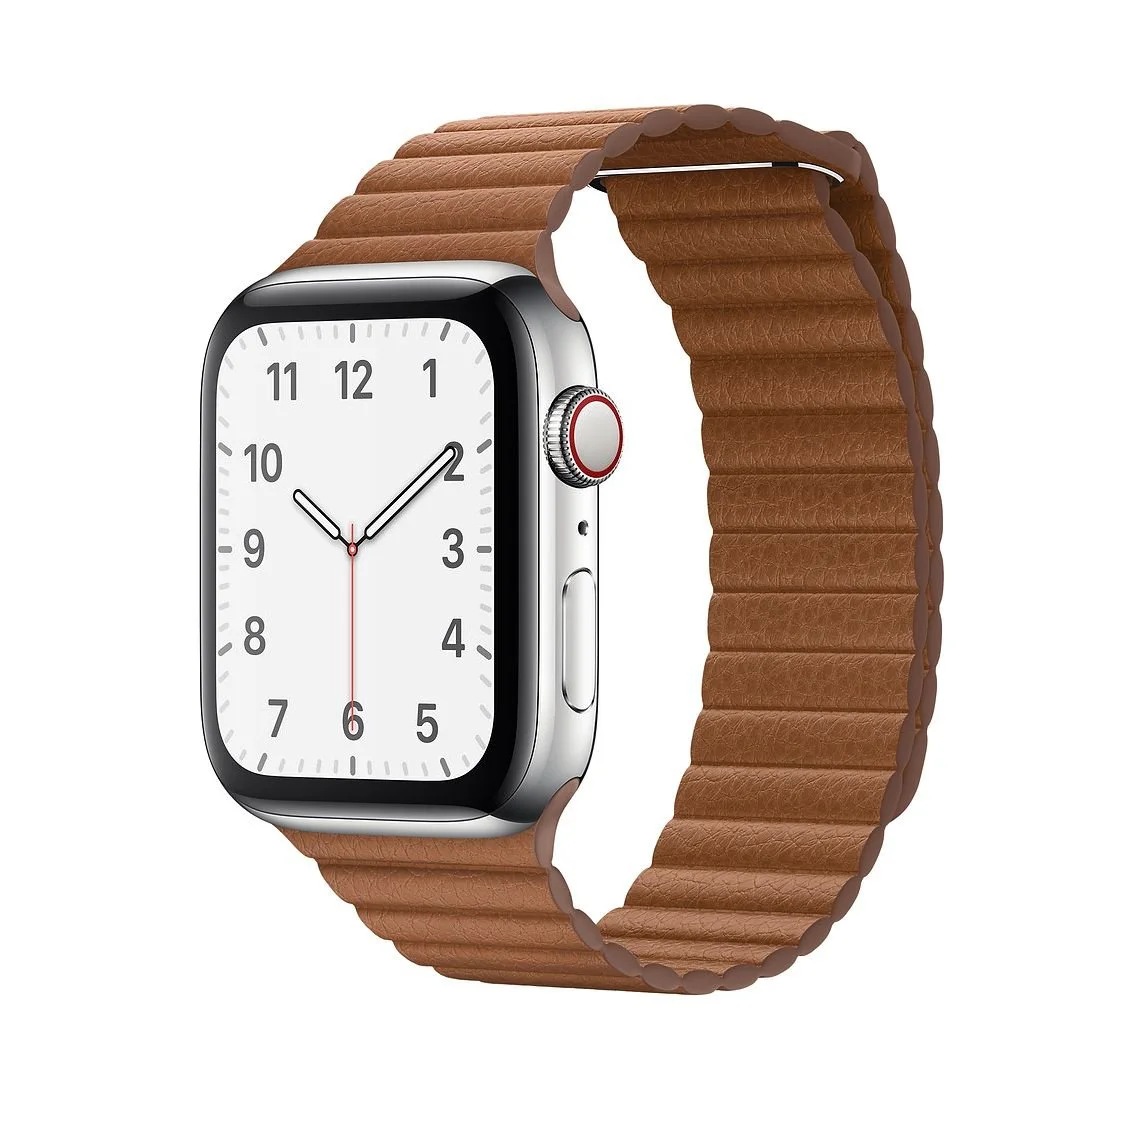 Řemínek iMore Leather Loop Apple Watch Series 3/2/1 (38mm) - Sedlově hnědý